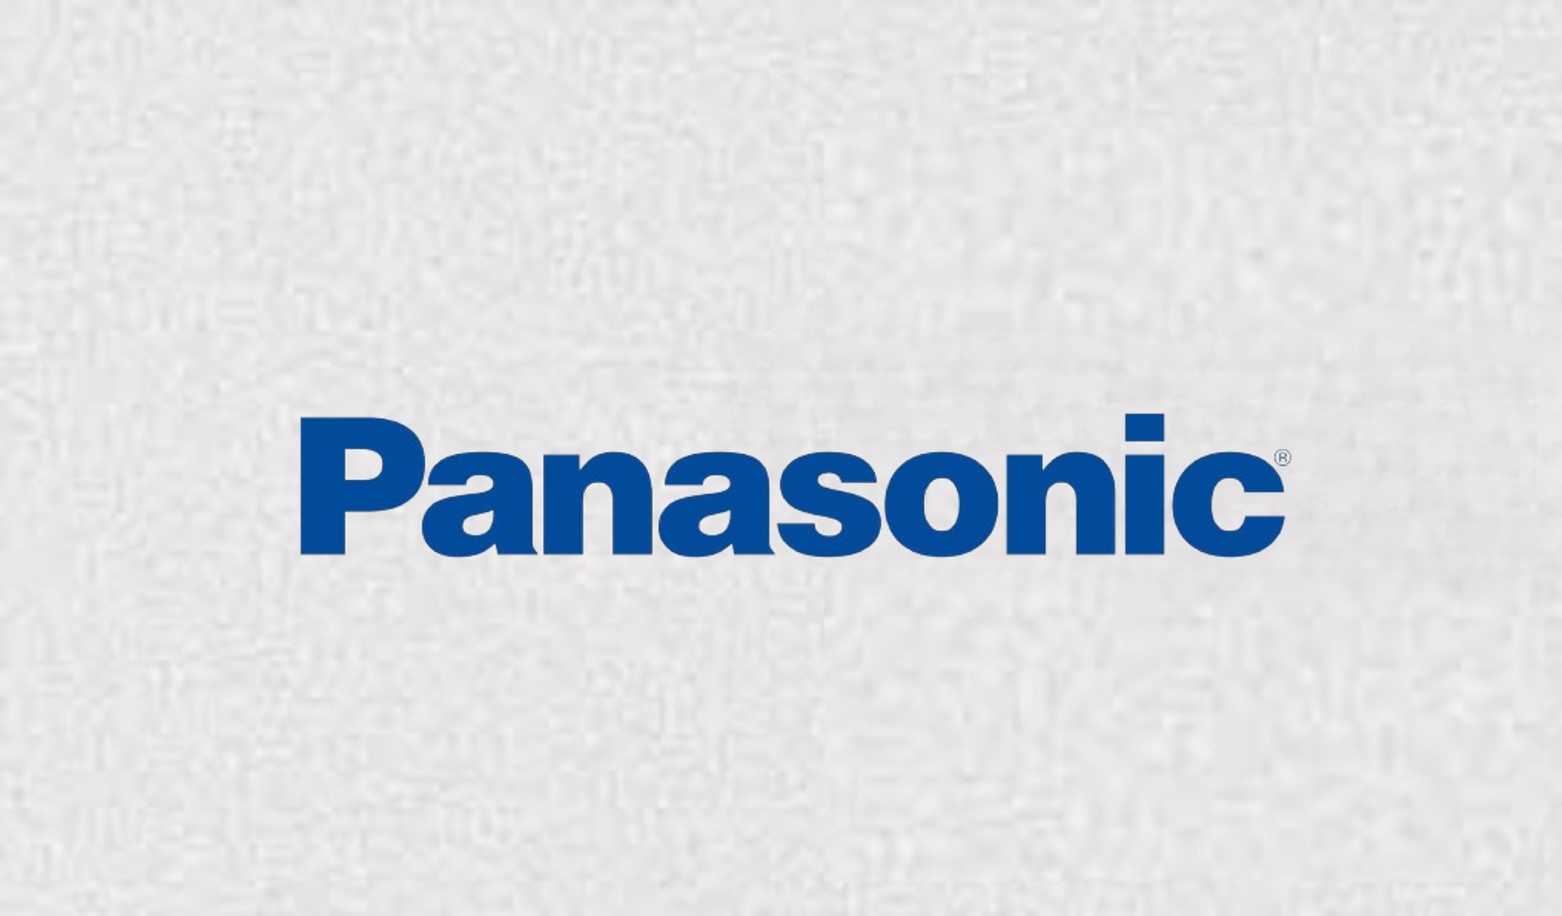 Pansasonice Customize Priting